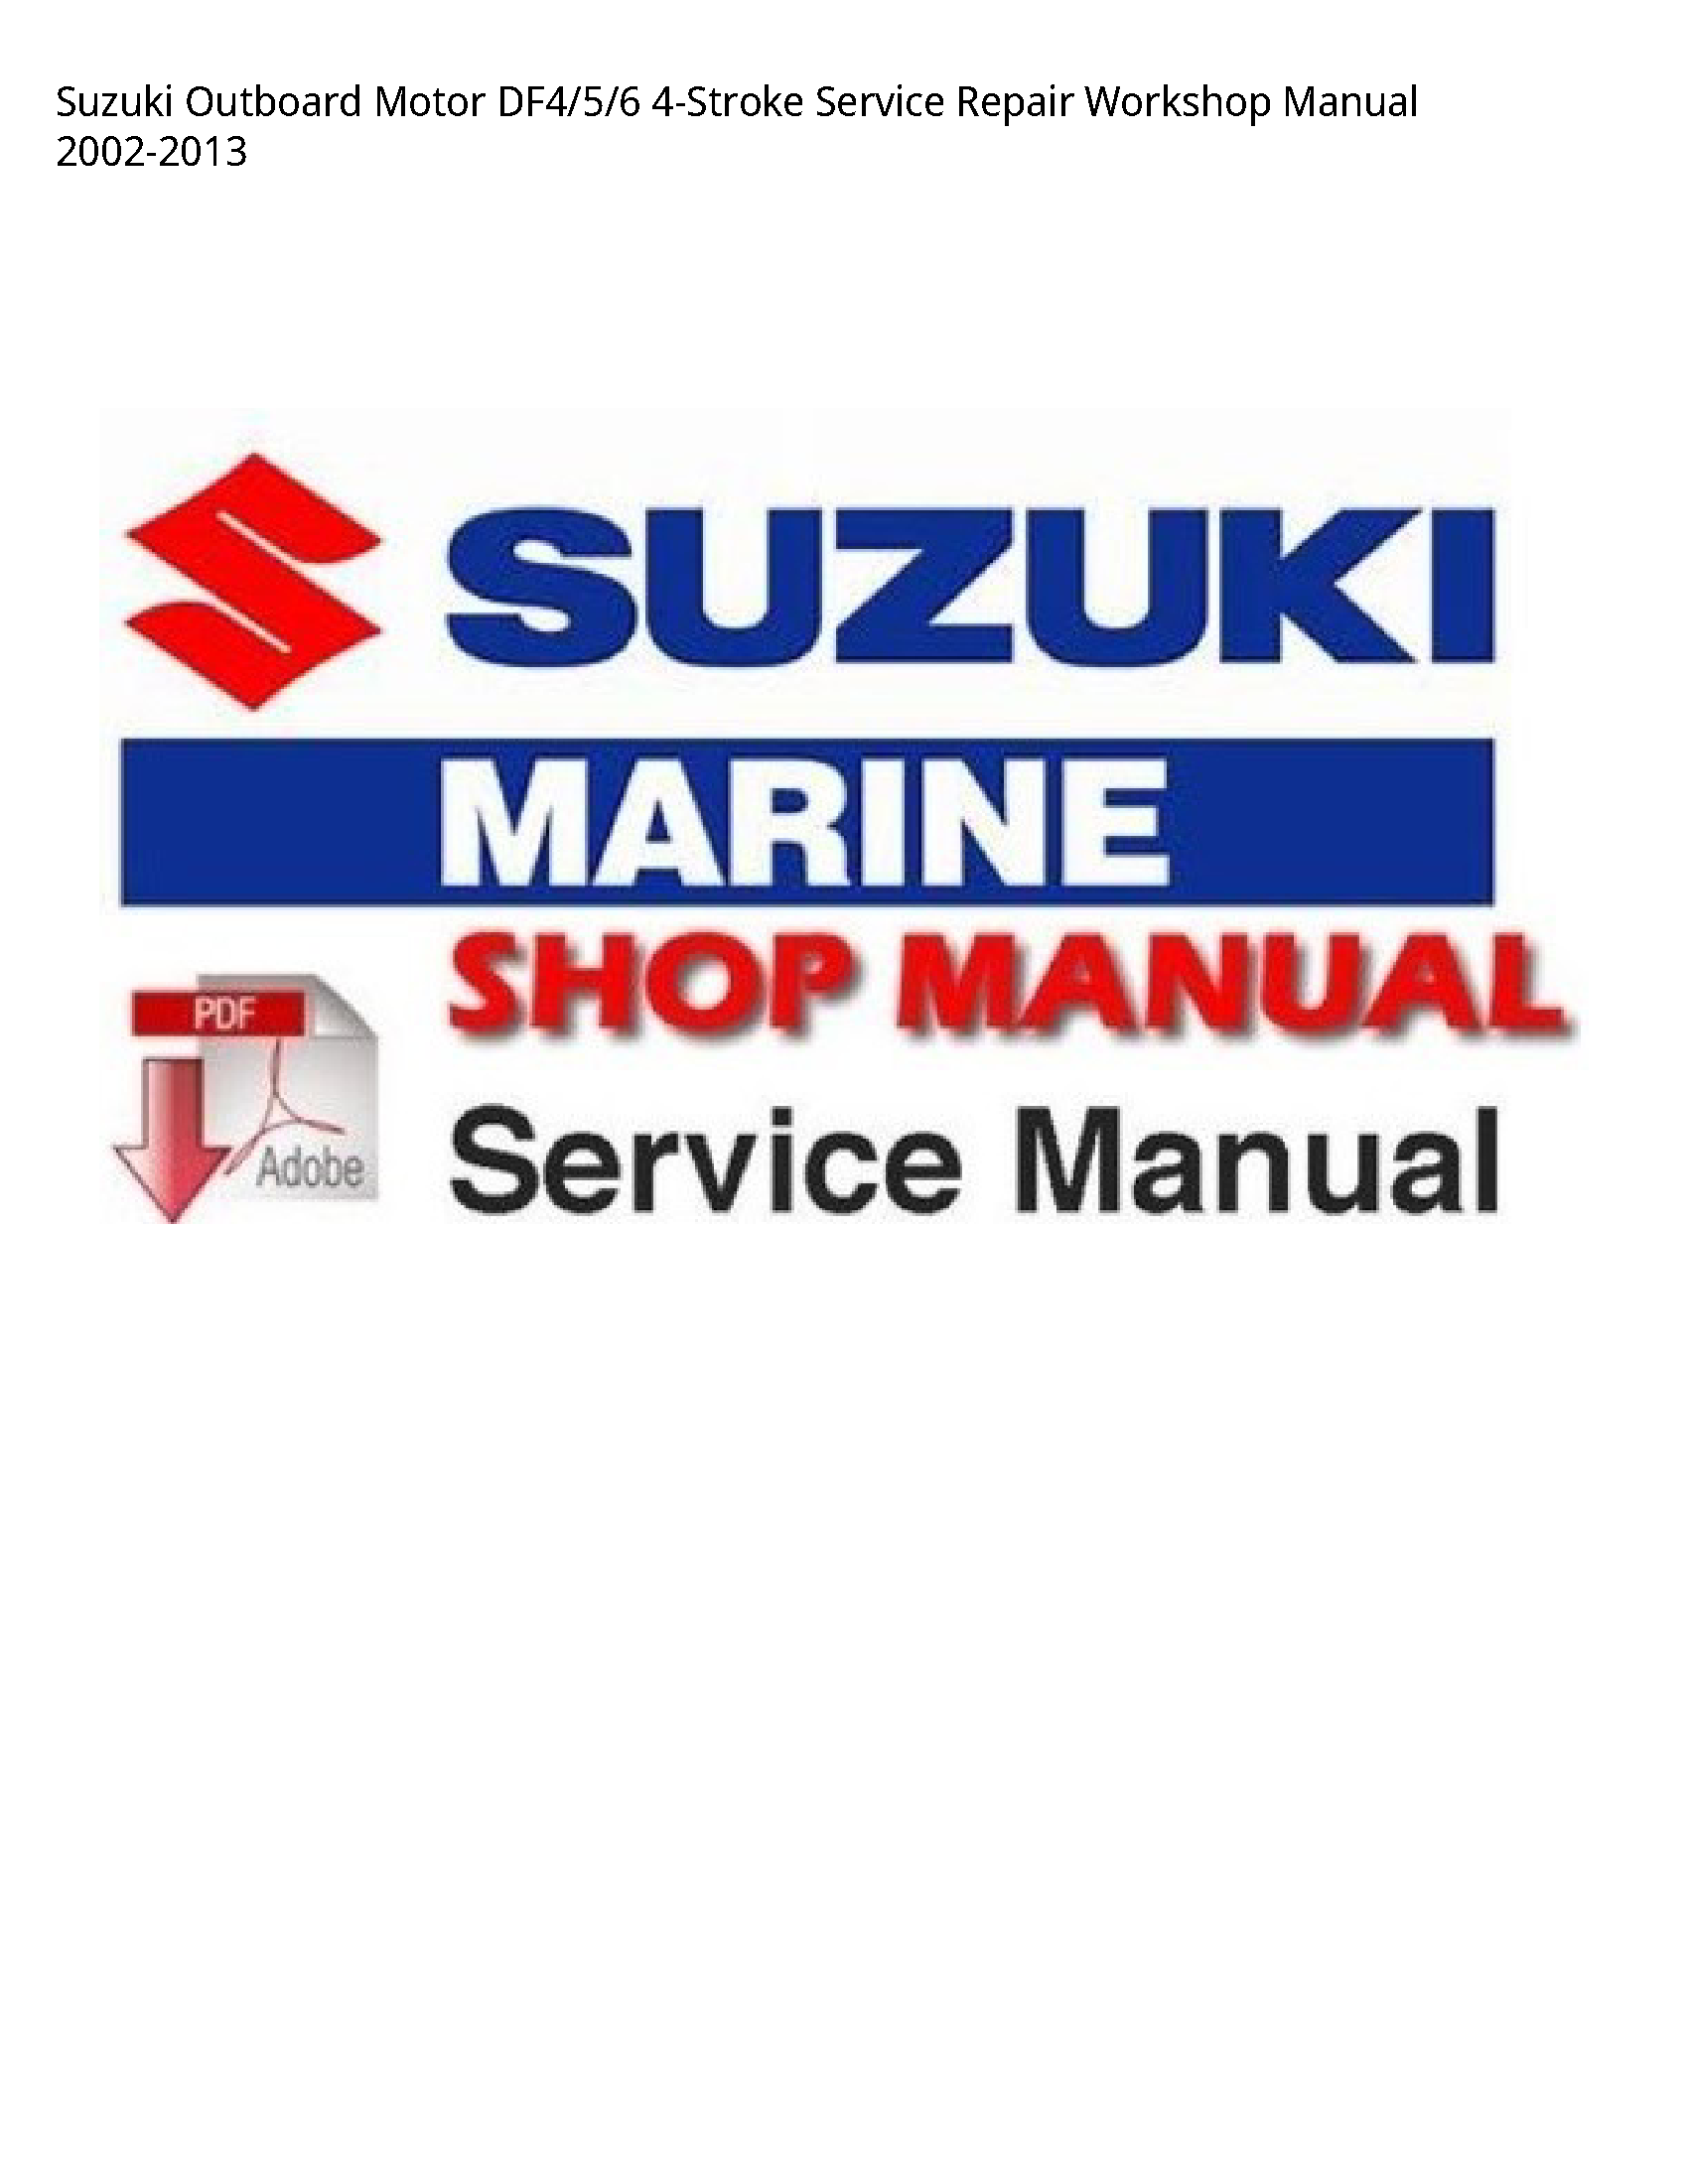 Suzuki DF4 Outboard Motor manual